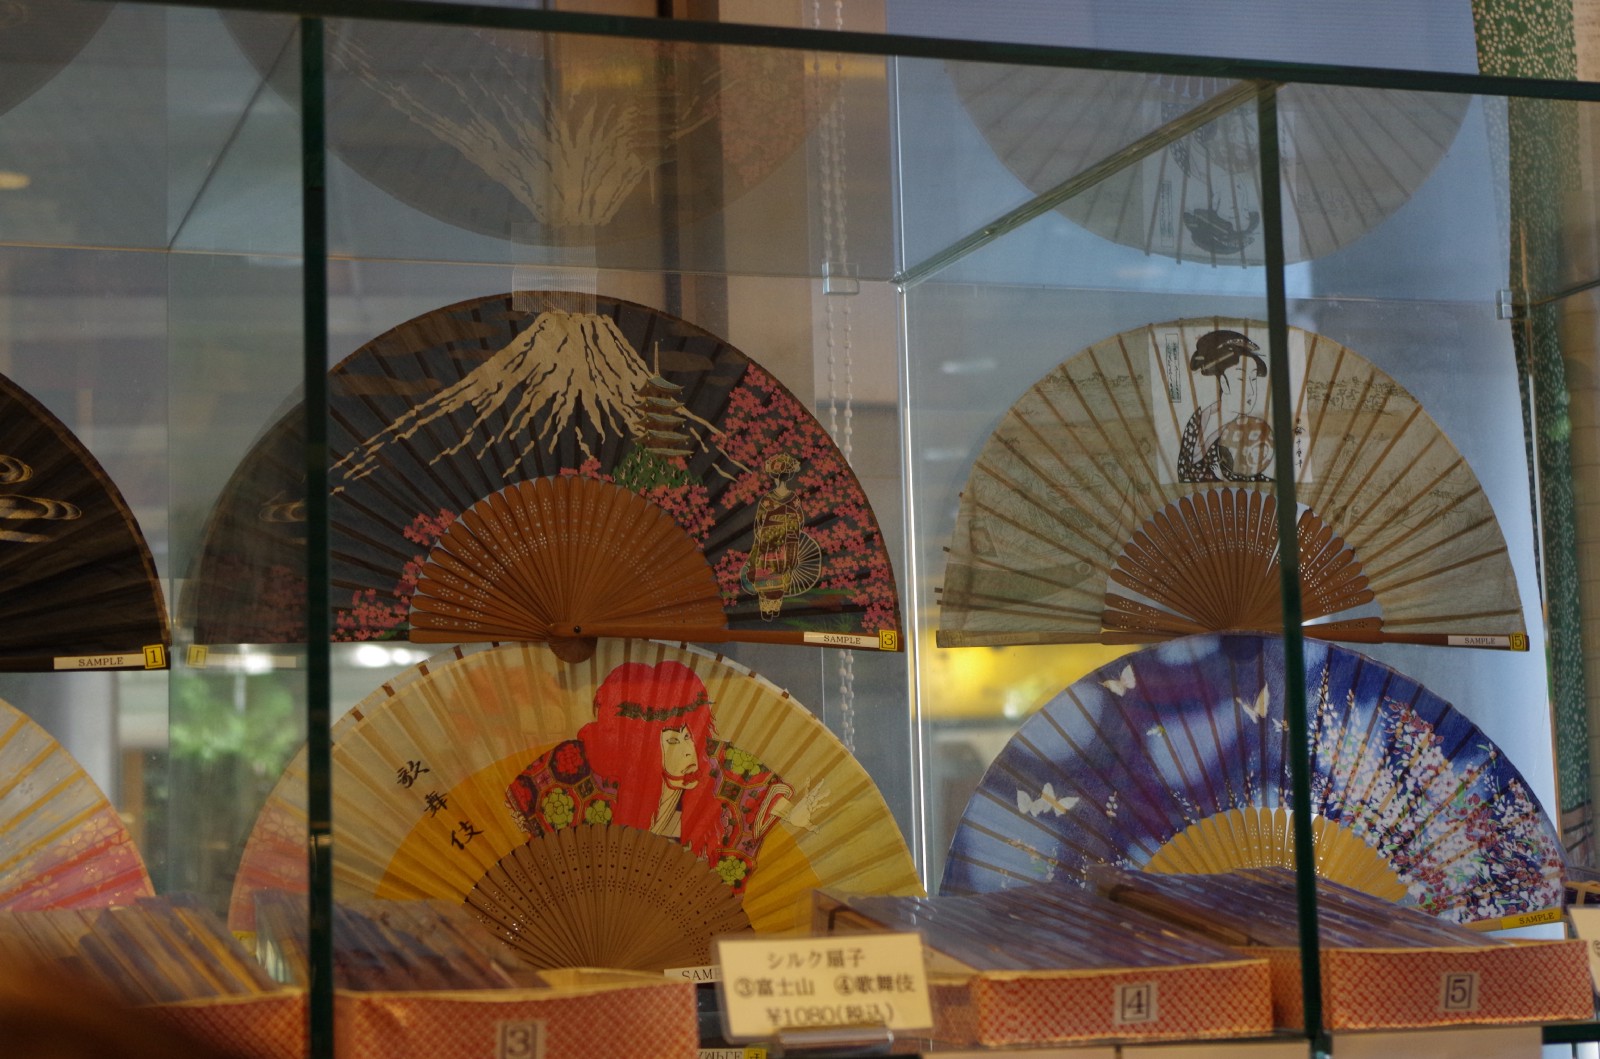 Souvenirs sold in Meiji Shrine